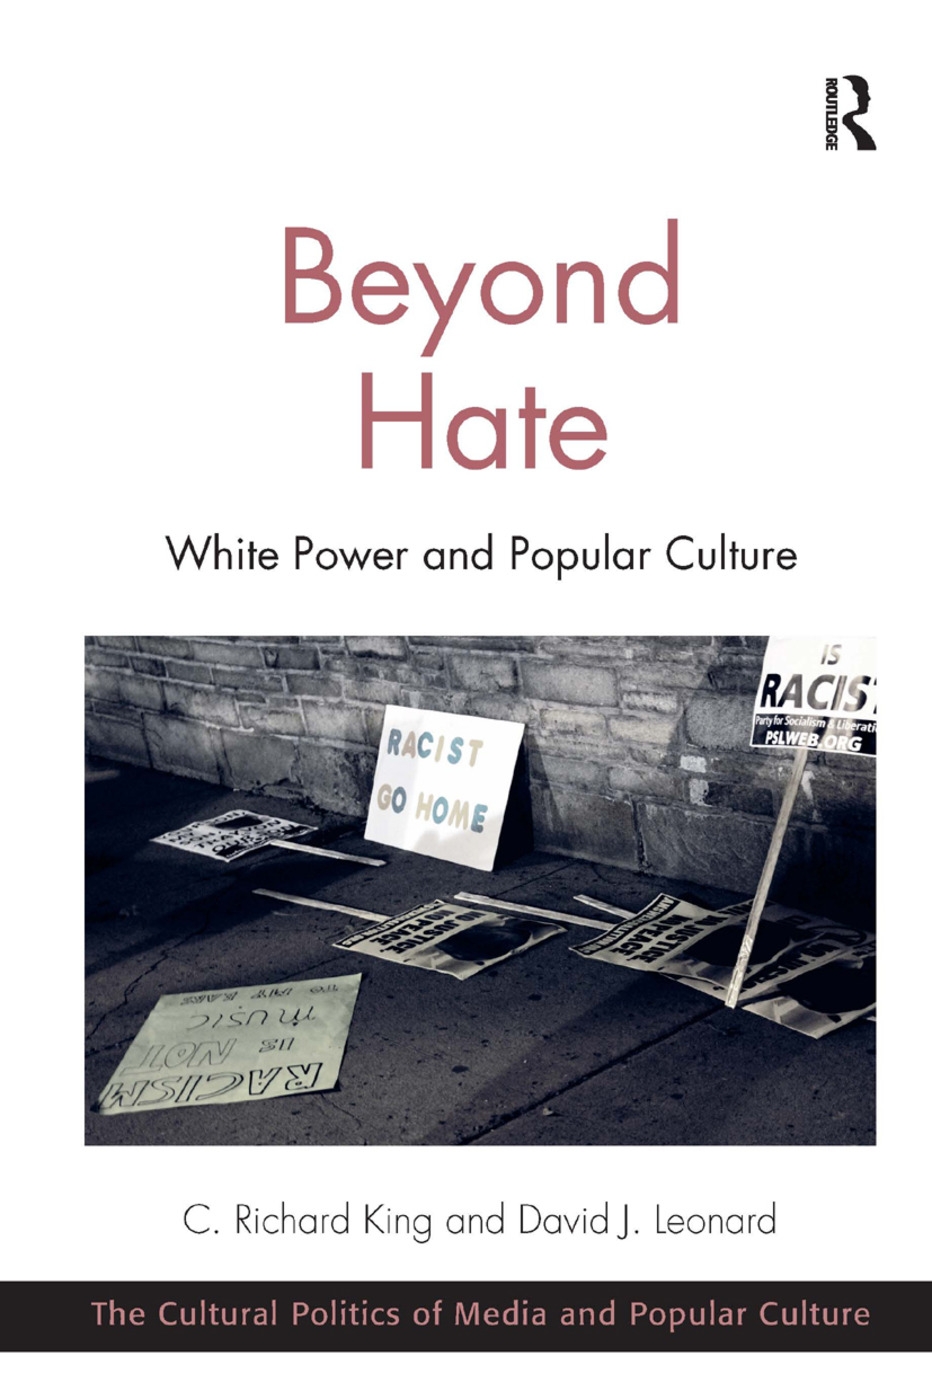 Beyond Hate: White Power and Popular Culture. C. Richard King and David J. Leonard